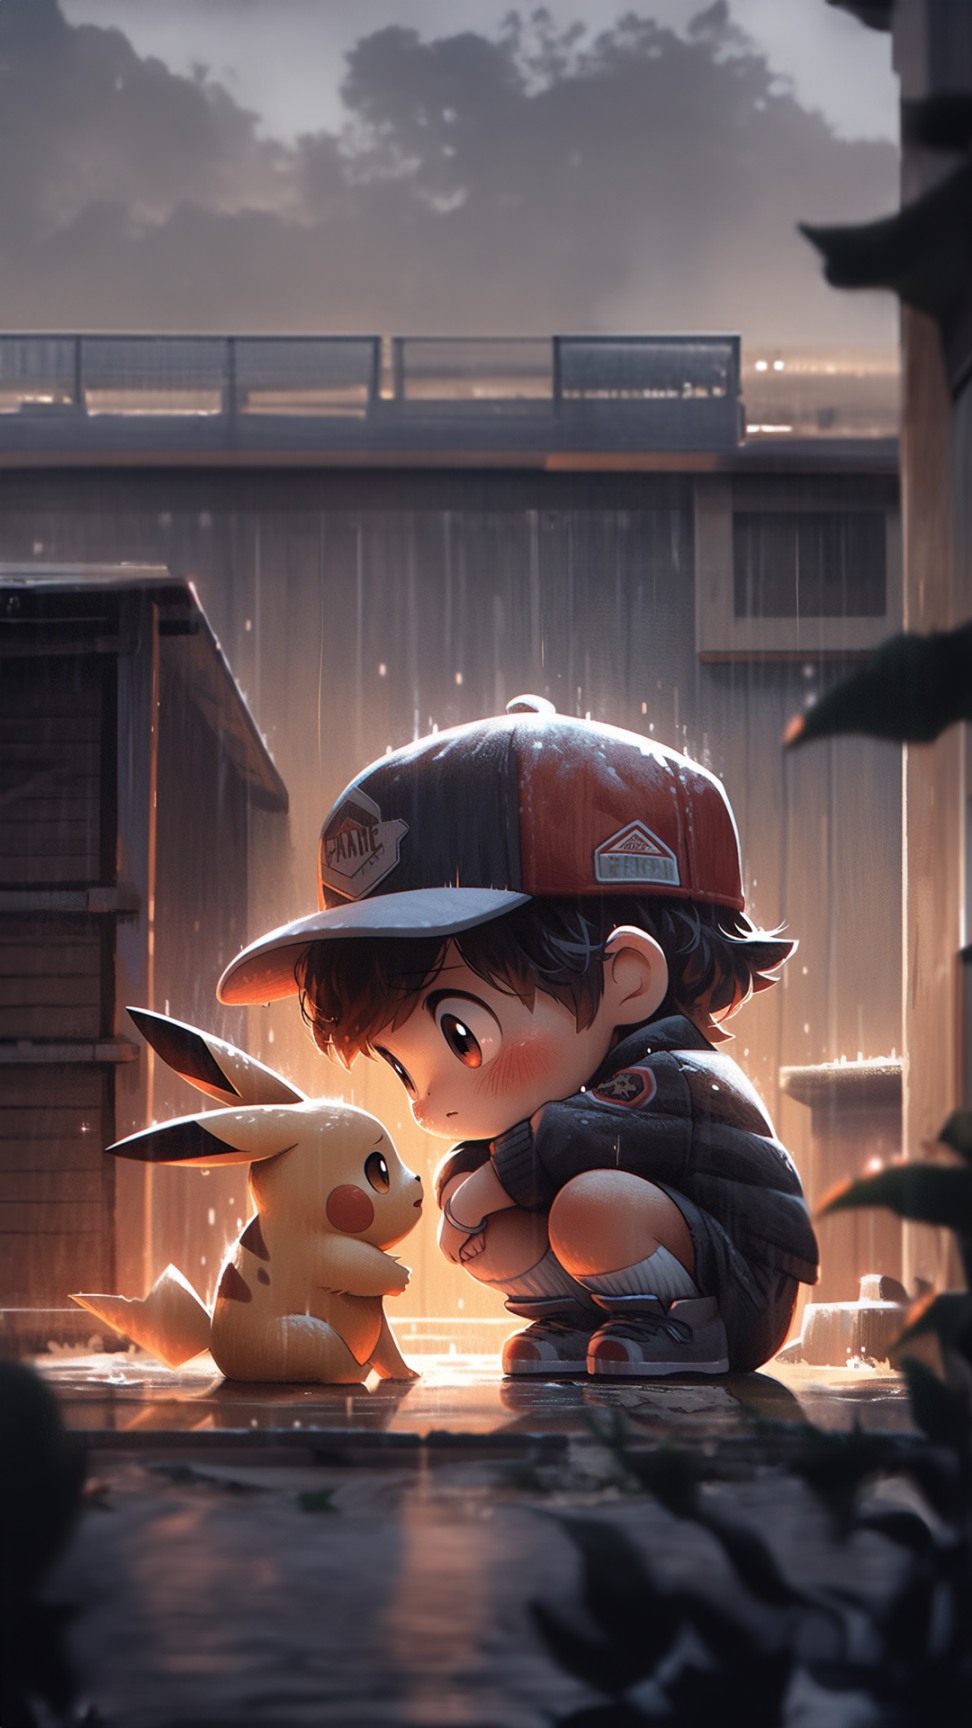 Ash Ketchum (Pokémon) iphone wallpaper